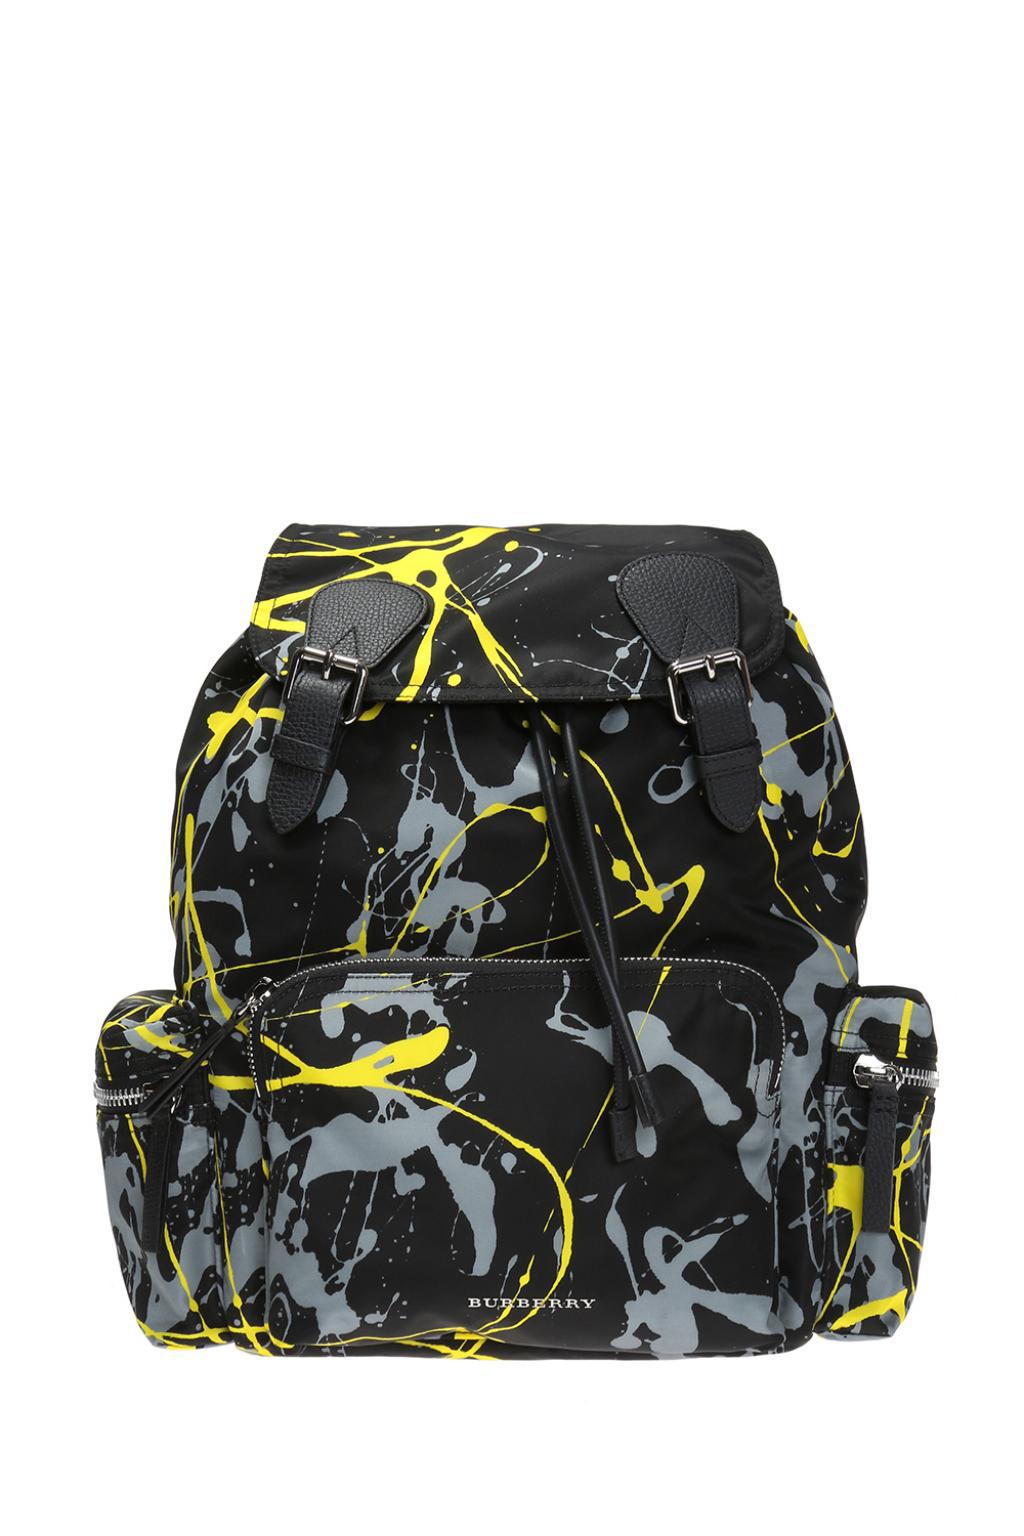 Burberry 'splash Print' Patterned Backpack in Black for Men | Lyst